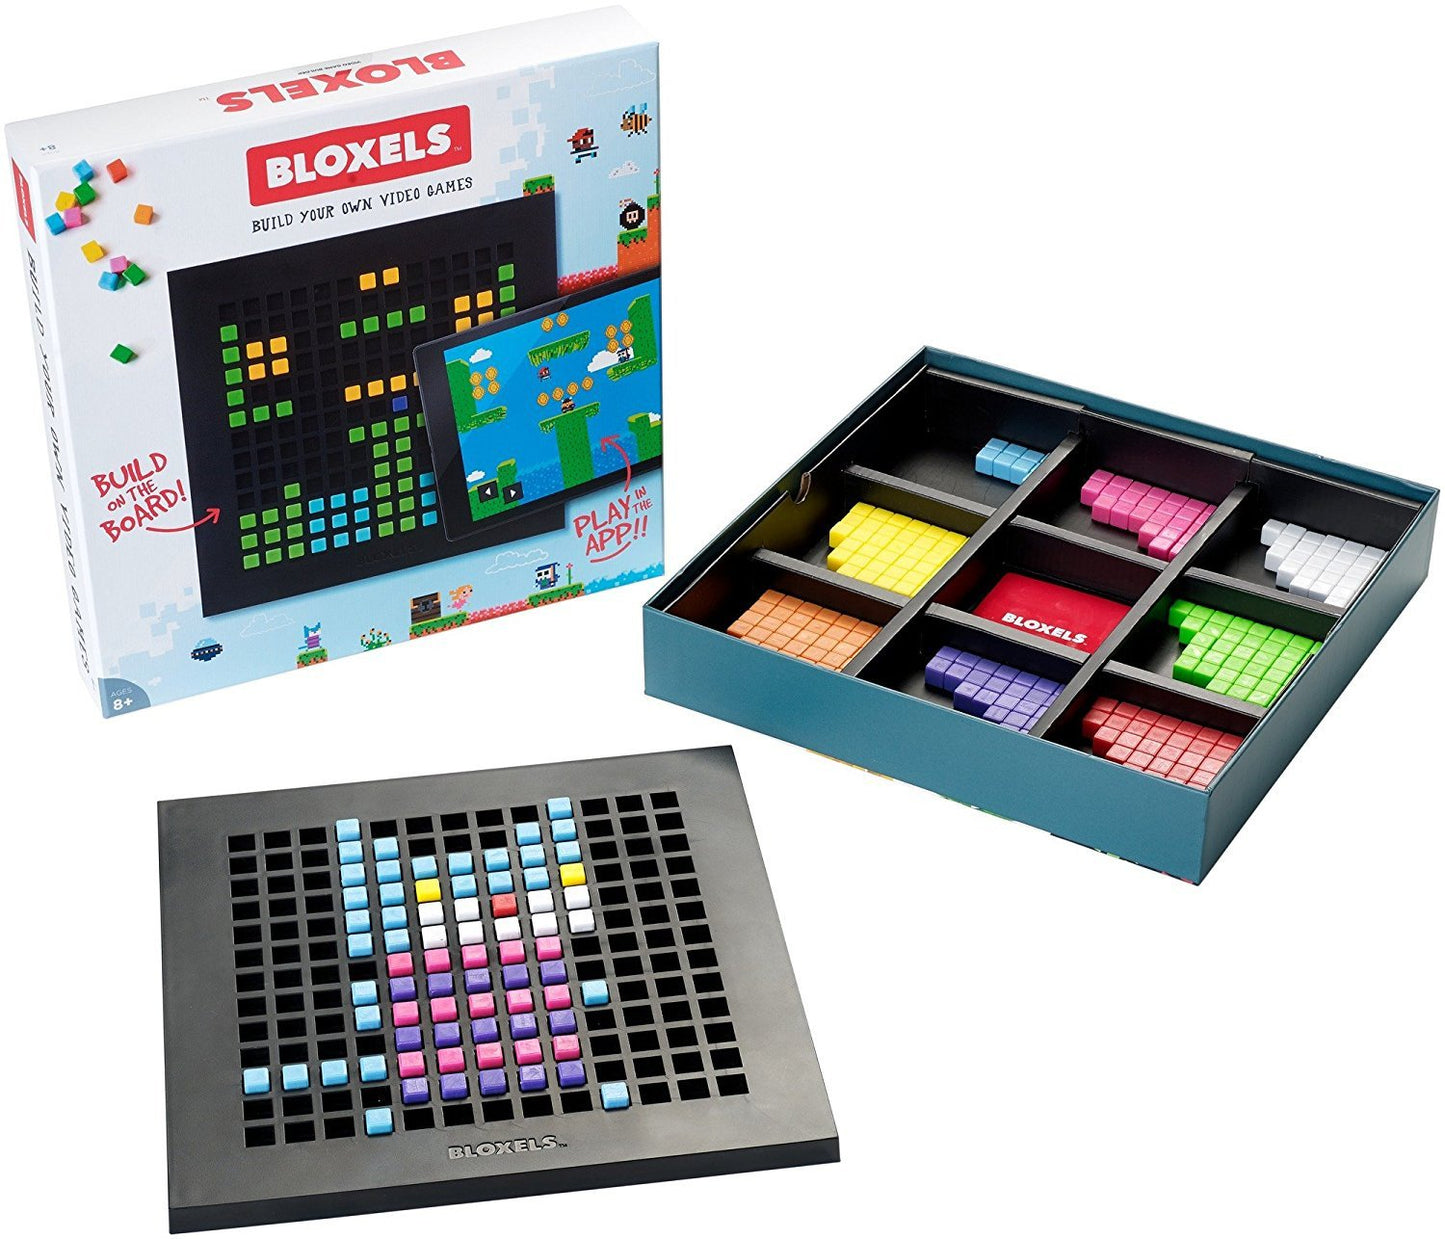 Bloxels Video Game Builder Kit